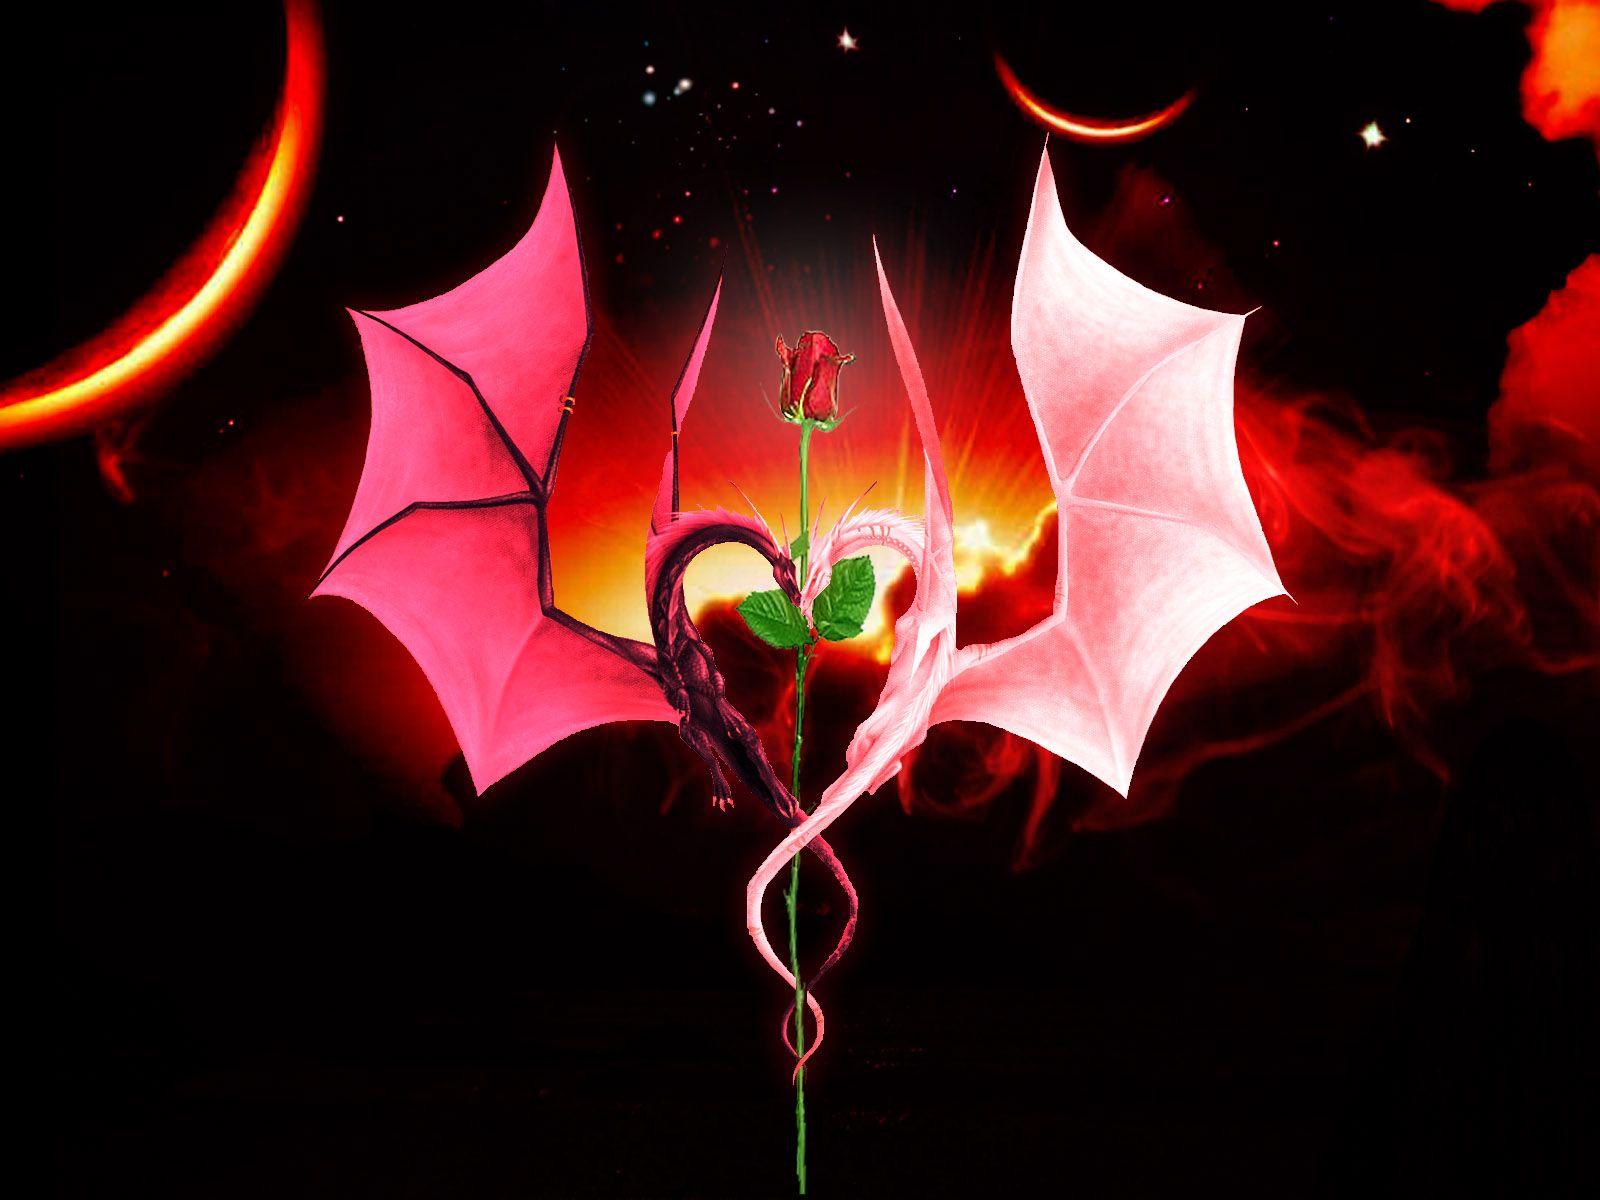 dragon free wallpaper download. Fantasy Dragon Love